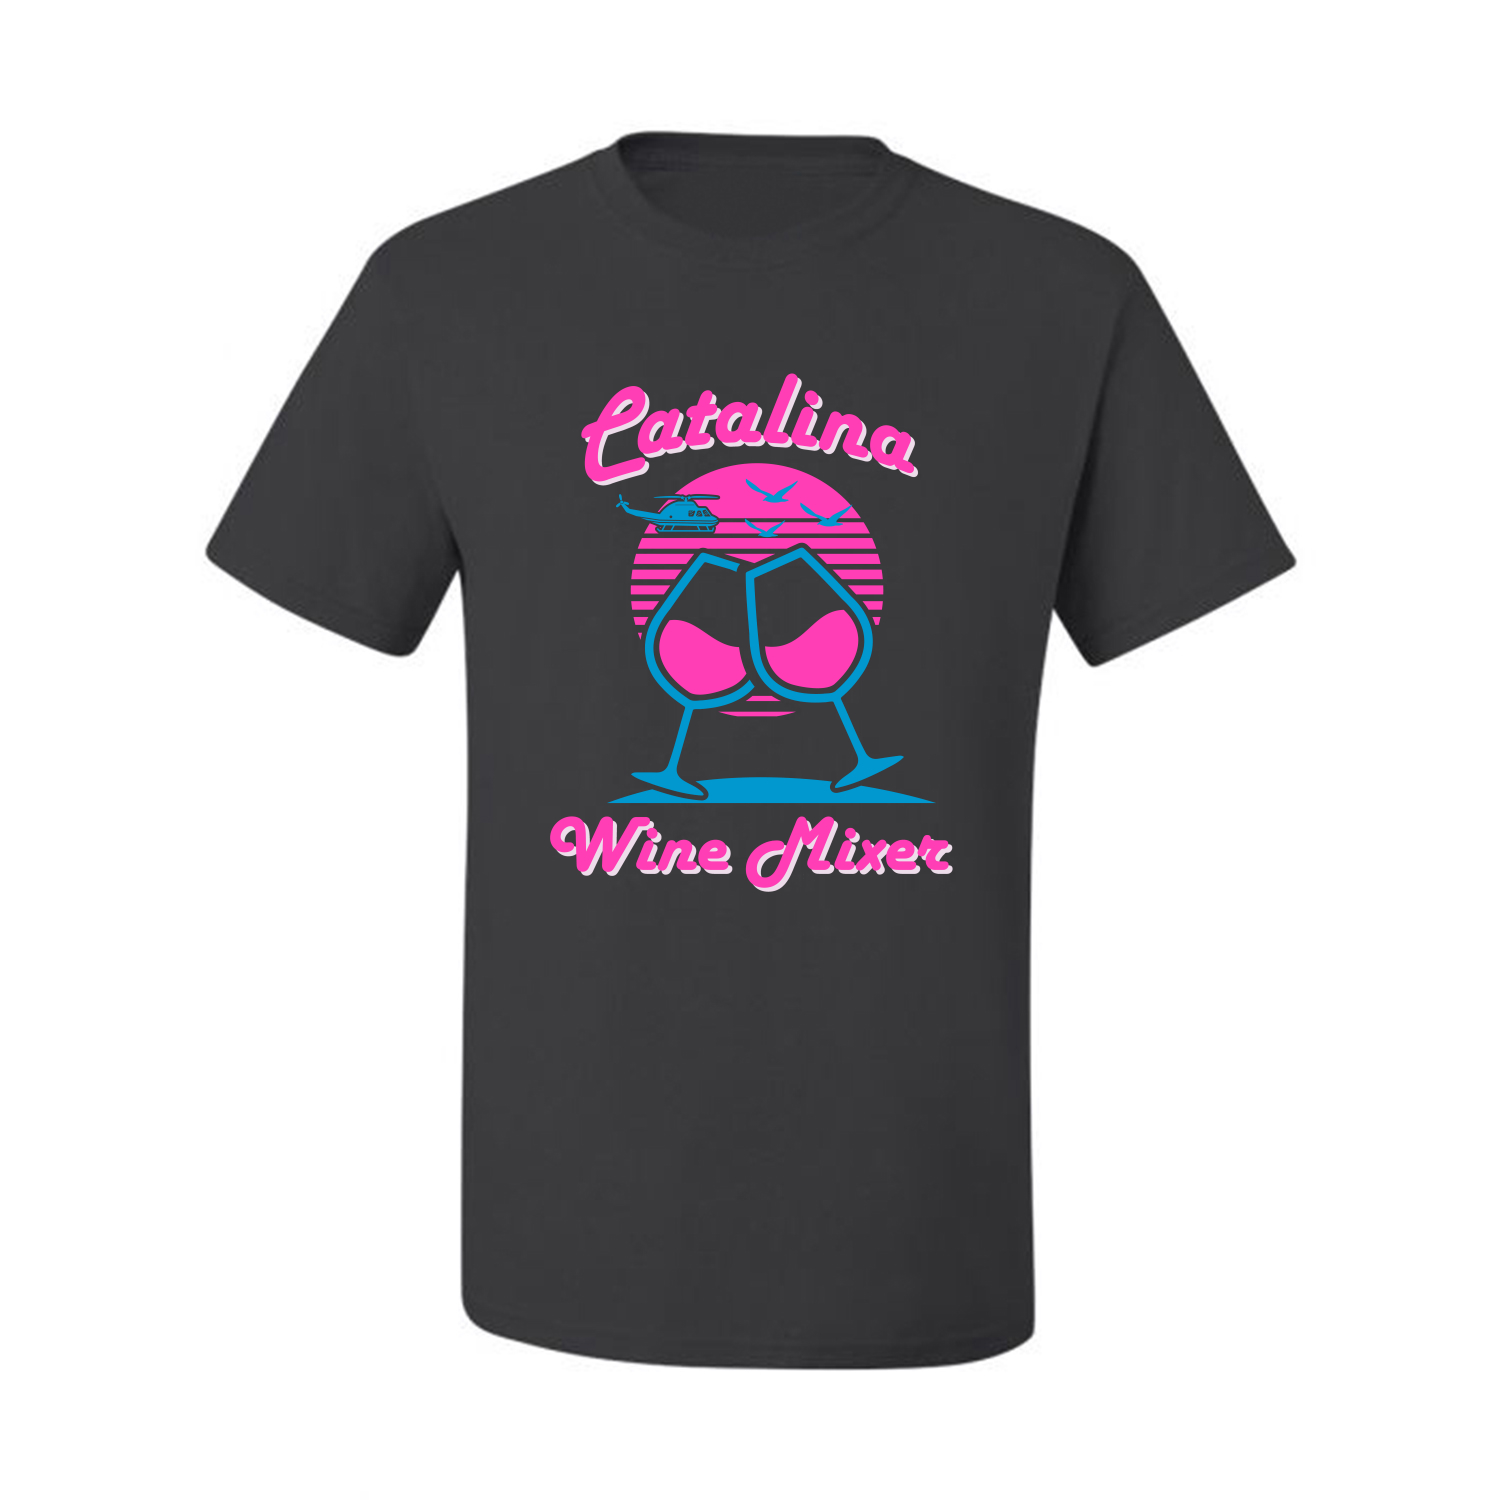 Catalina Wine Mixer Island Prestige Movie| Mens Pop Culture Graphic T-Shirt, Charcoal, 3XL - image 2 of 4